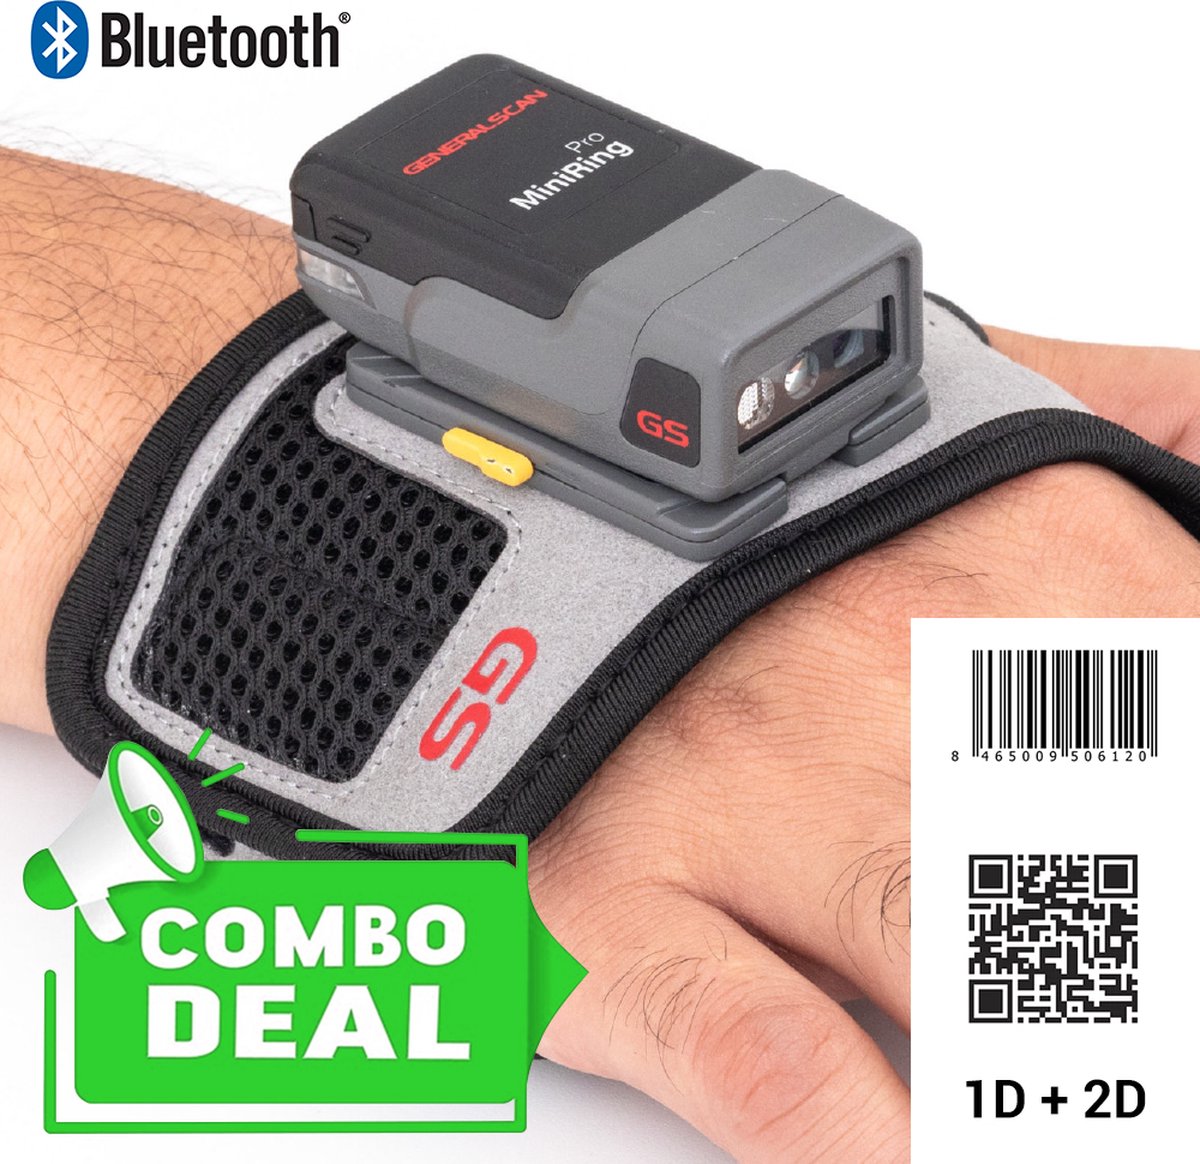 Generalscan GS R3521 with Scan Glove - Bluetooth 2D Barcode scanner - Combi Deal - 2D-barcodes - Handscanner